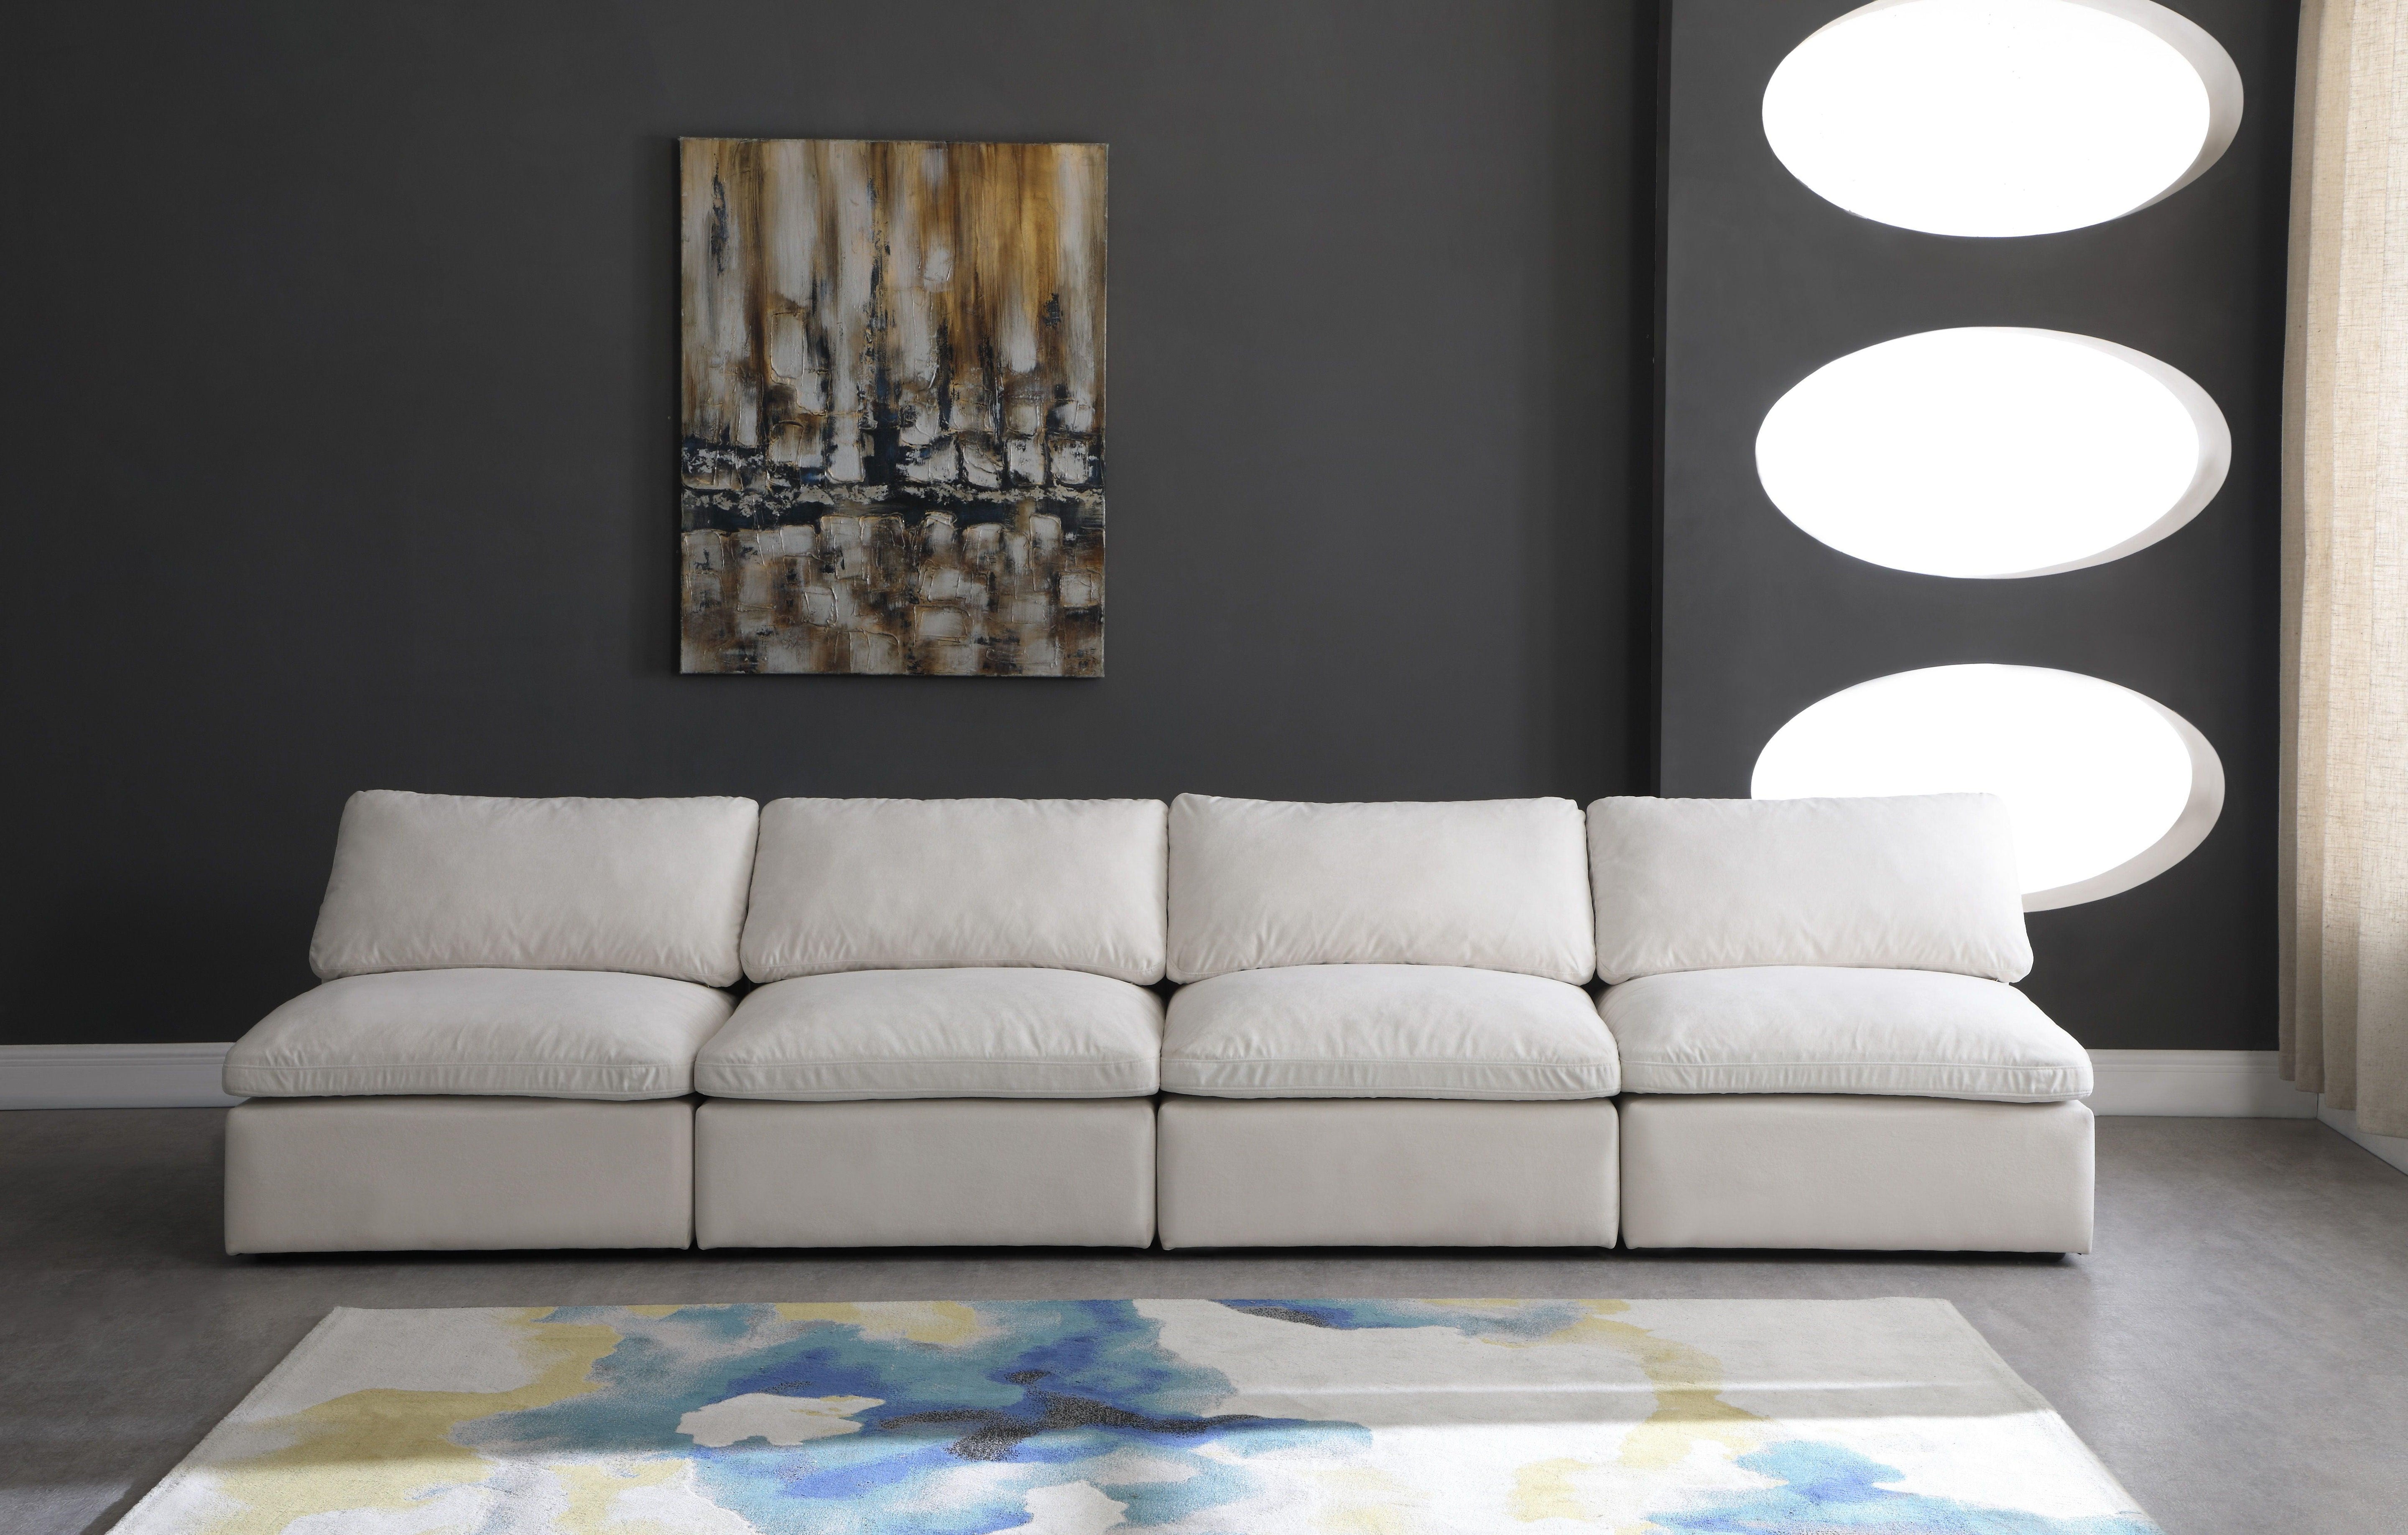 Meridian Furniture - Plush - Modular Armless 4 Seat Sofa - 5th Avenue Furniture